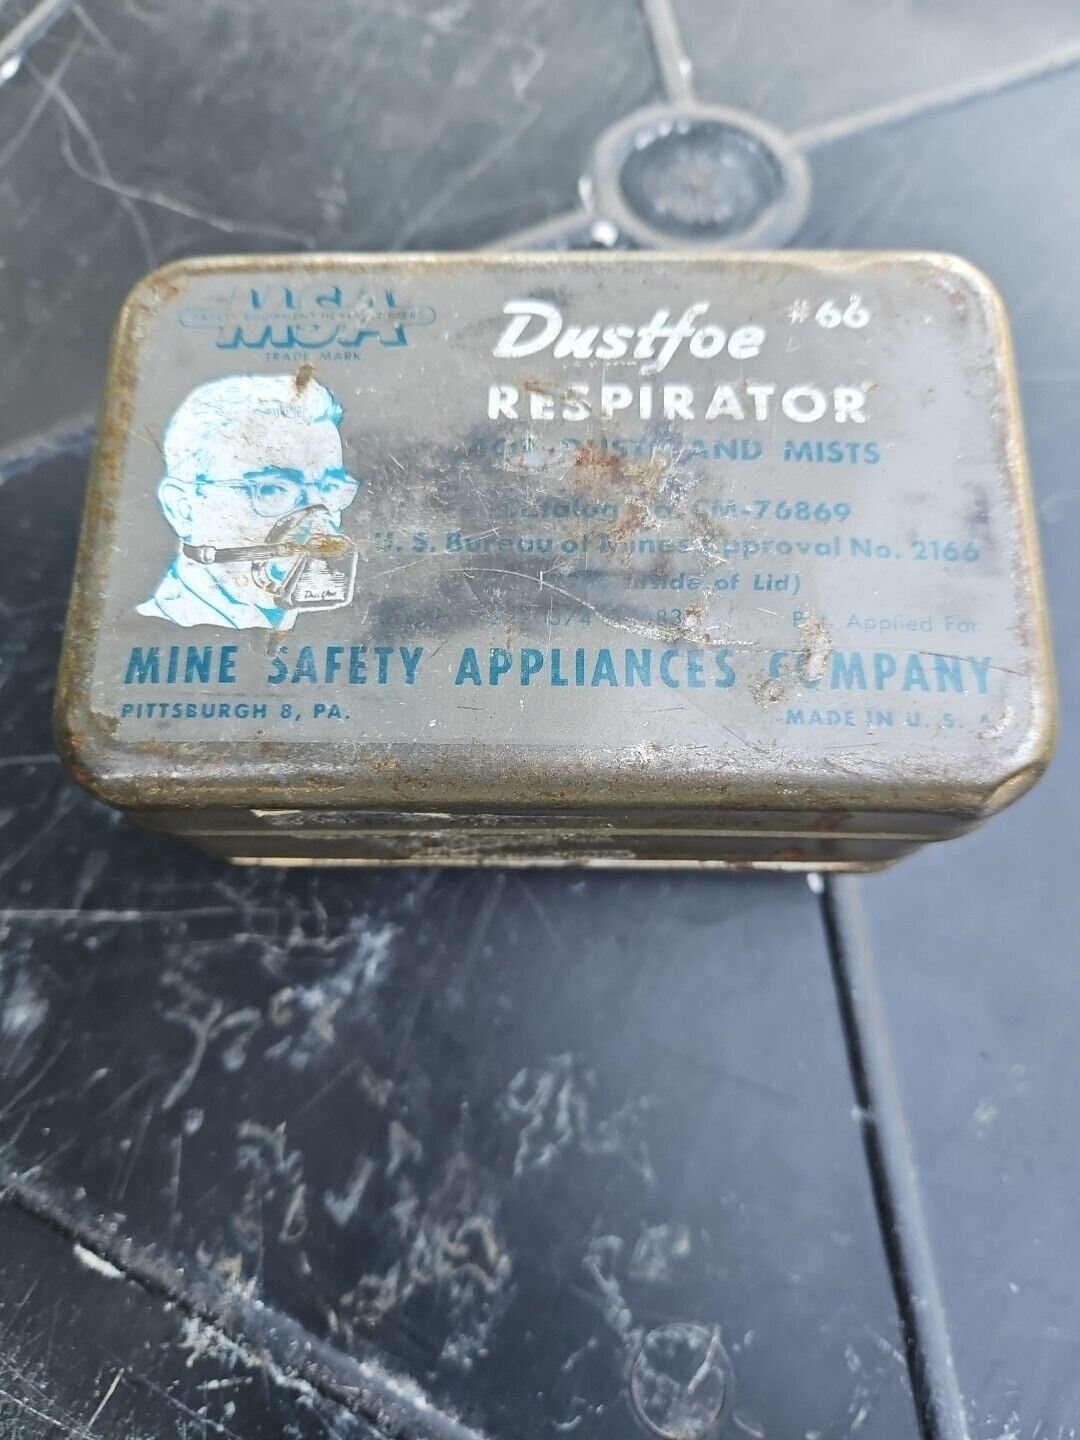 AS IS Vintage Tin. MSA Dustfoe #66 MINING TIN  Pittsburgh 8, PA cm-76869 as is 